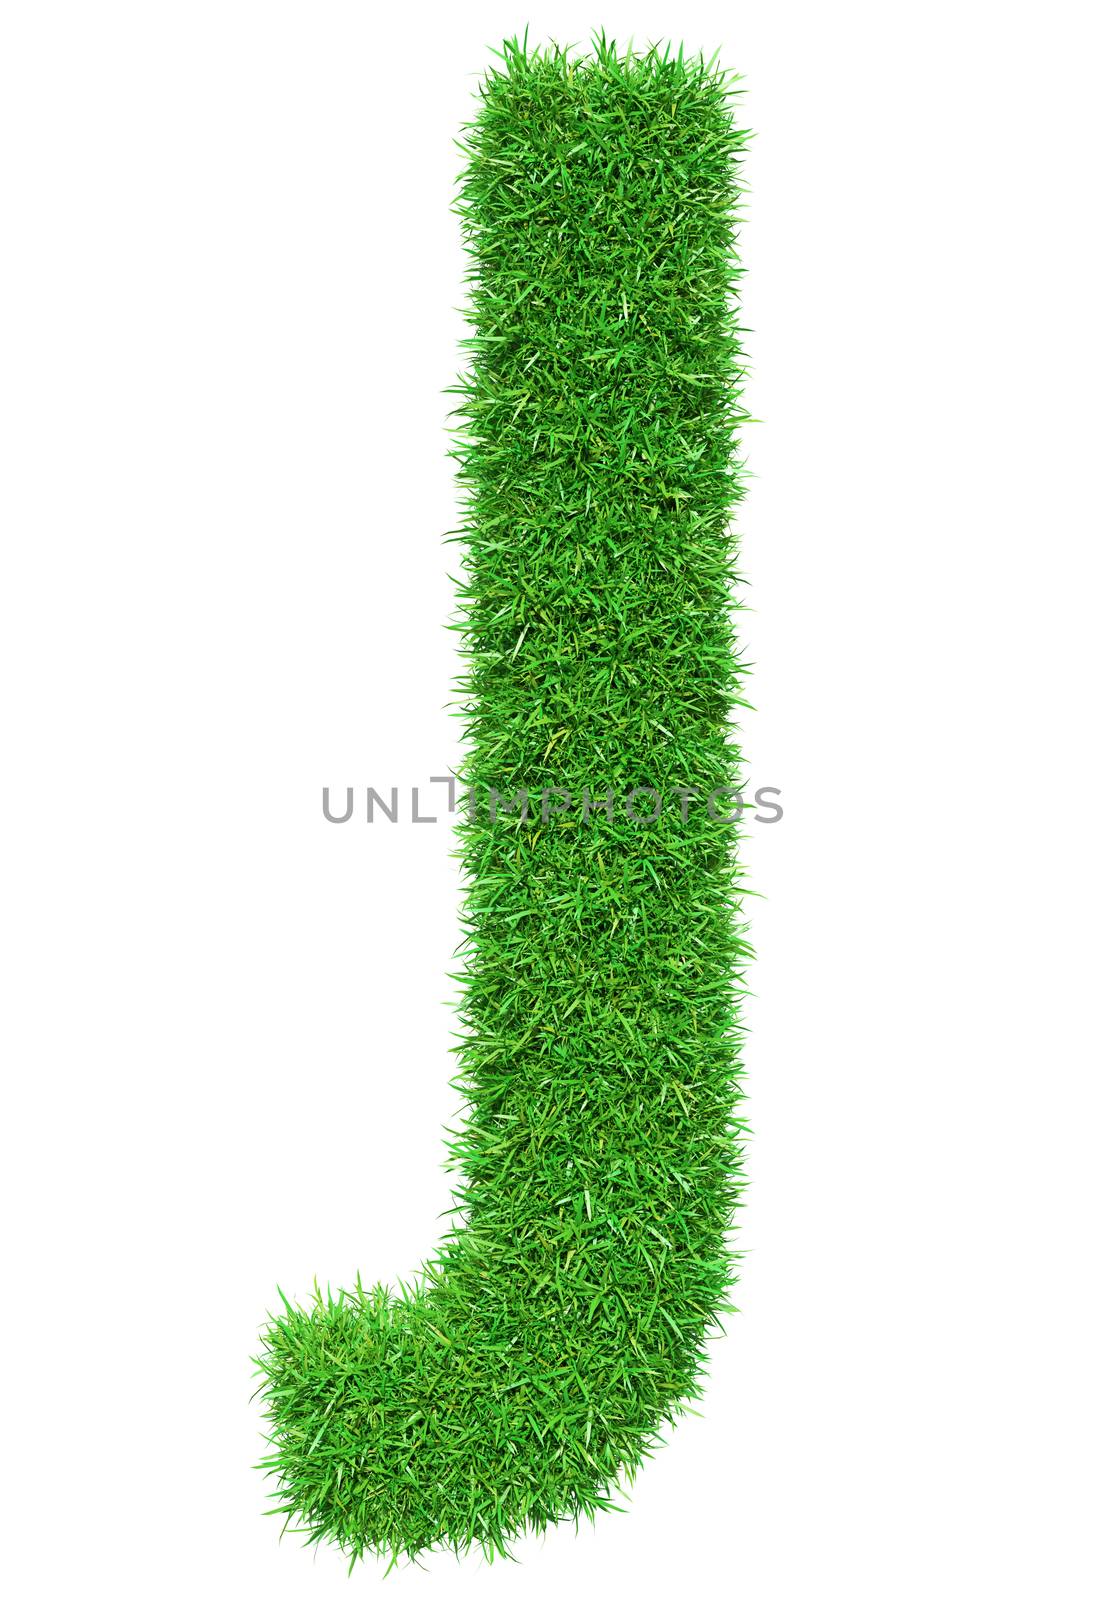 Green Grass Letter J by cherezoff